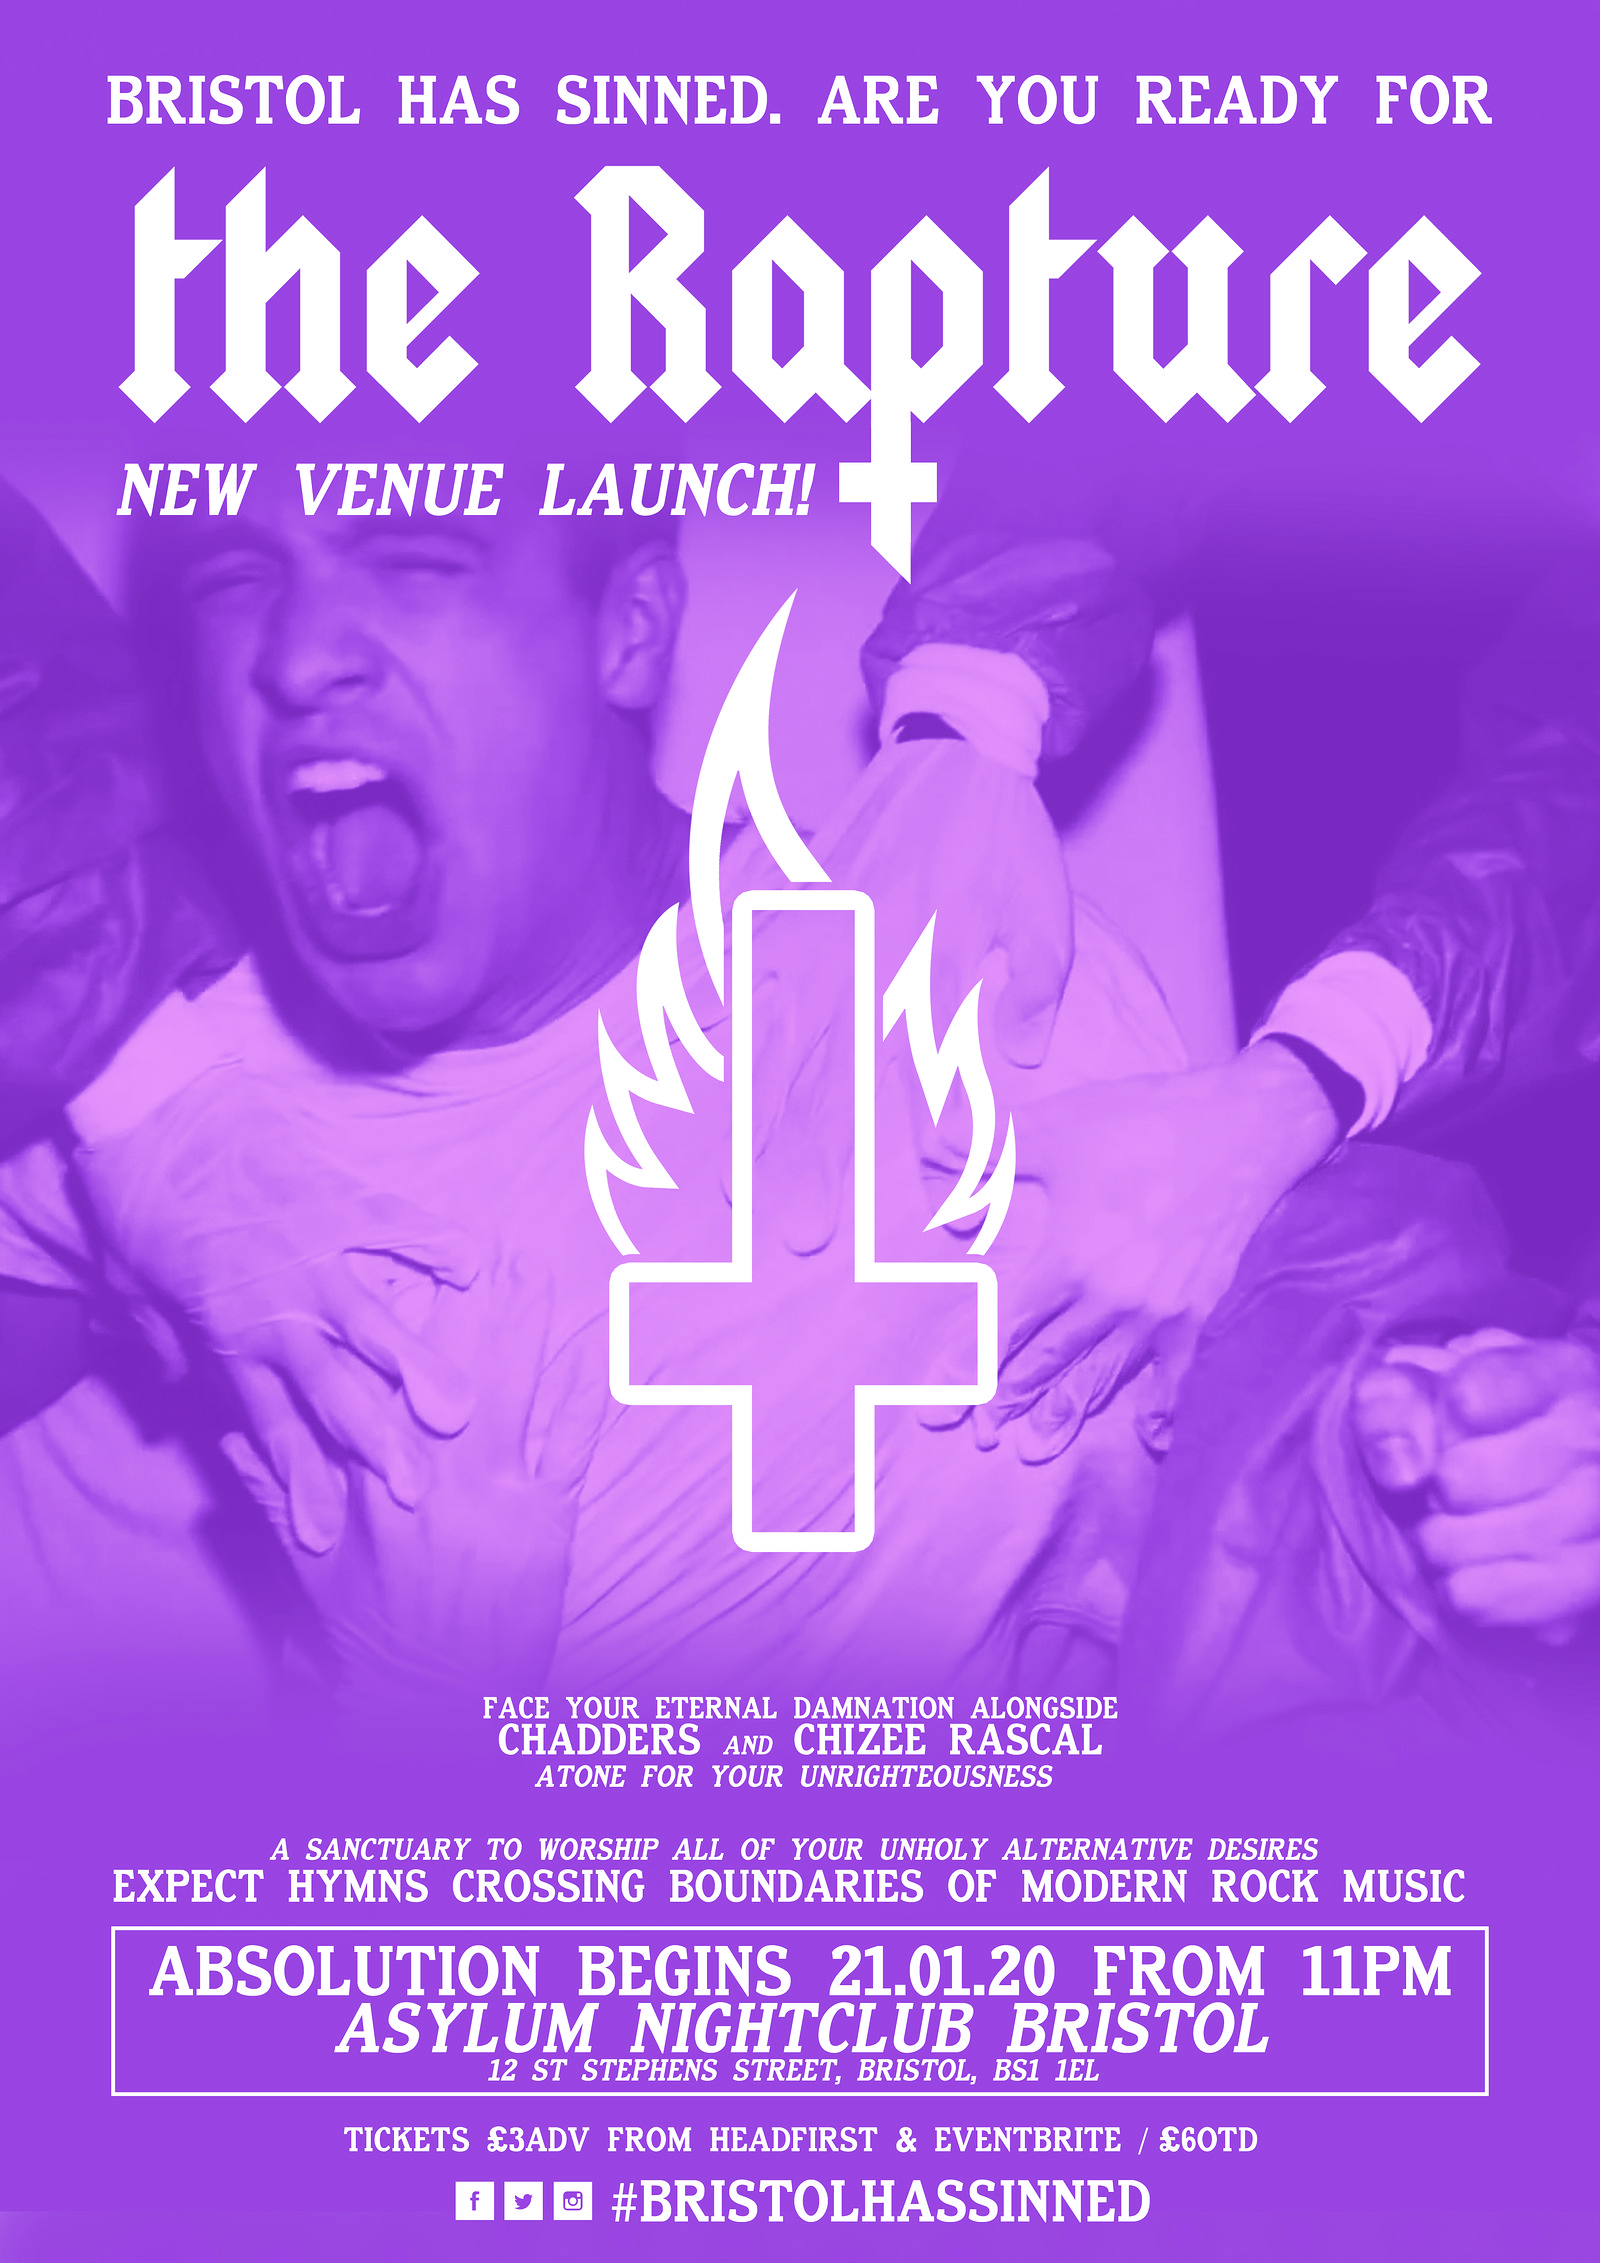 The Rapture - Bristol - NEW VENUE LAUNCH - 22.05 at Asylum Nightclub